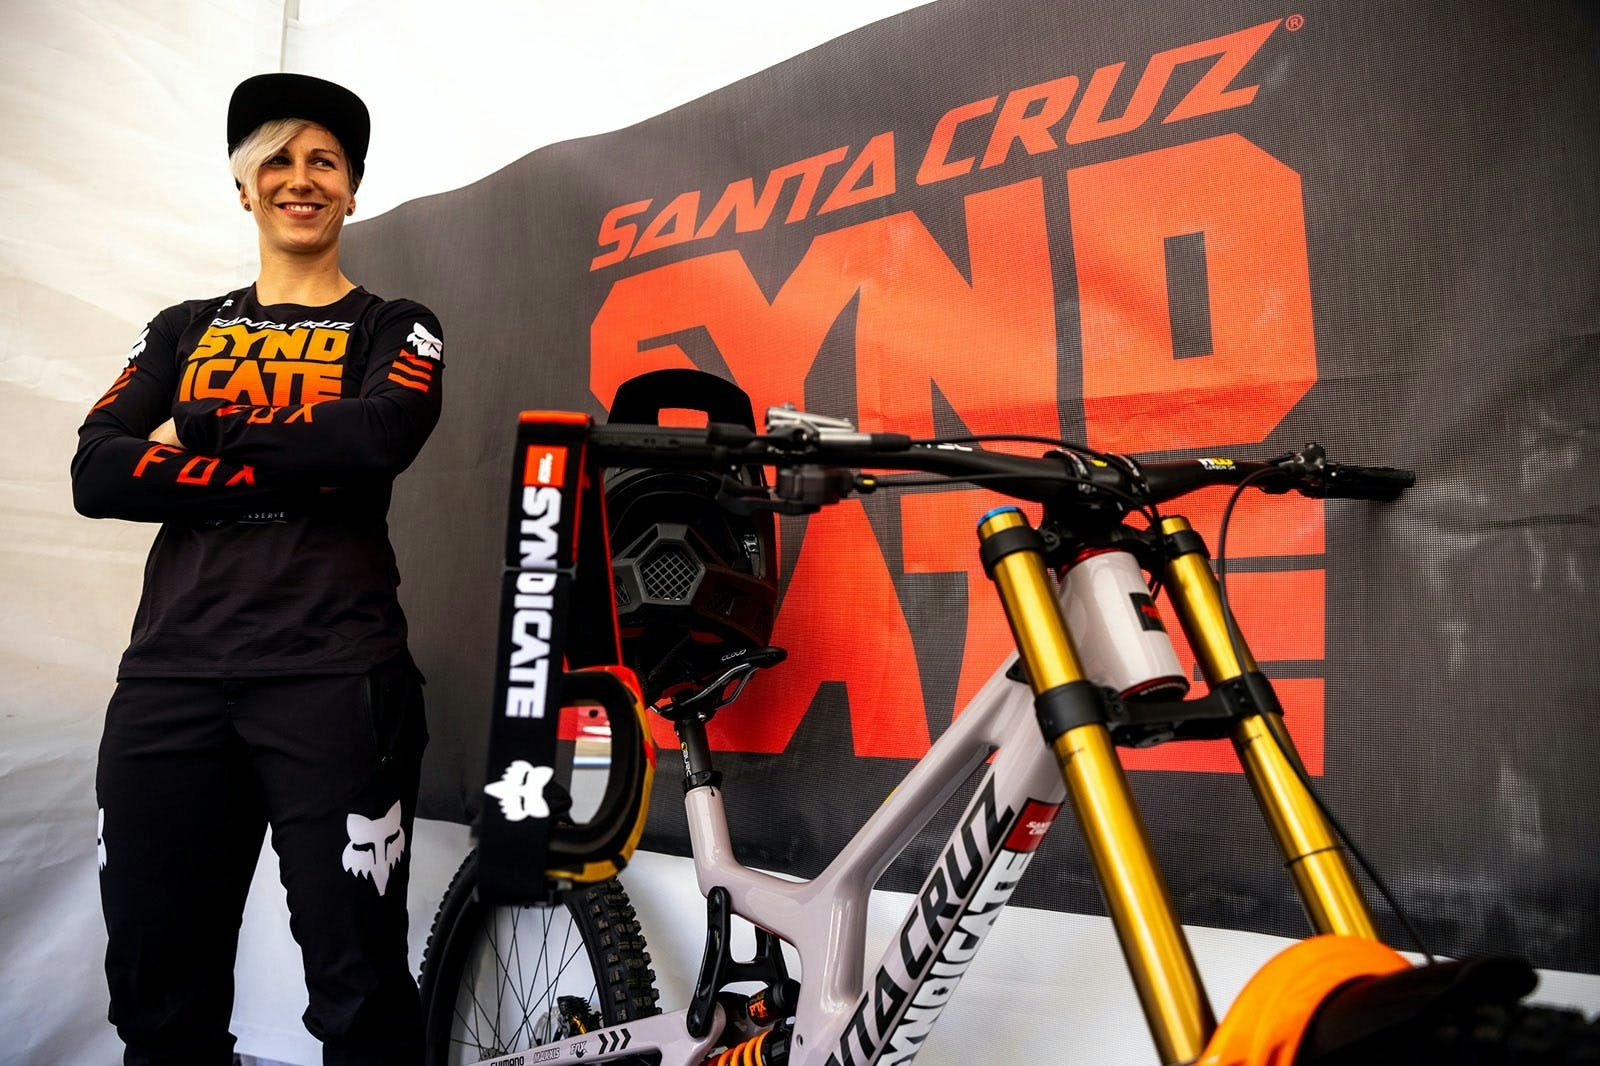 Nina Hoffmann Greg Minnaar et son vélo de descente custom Santa Cruz V10